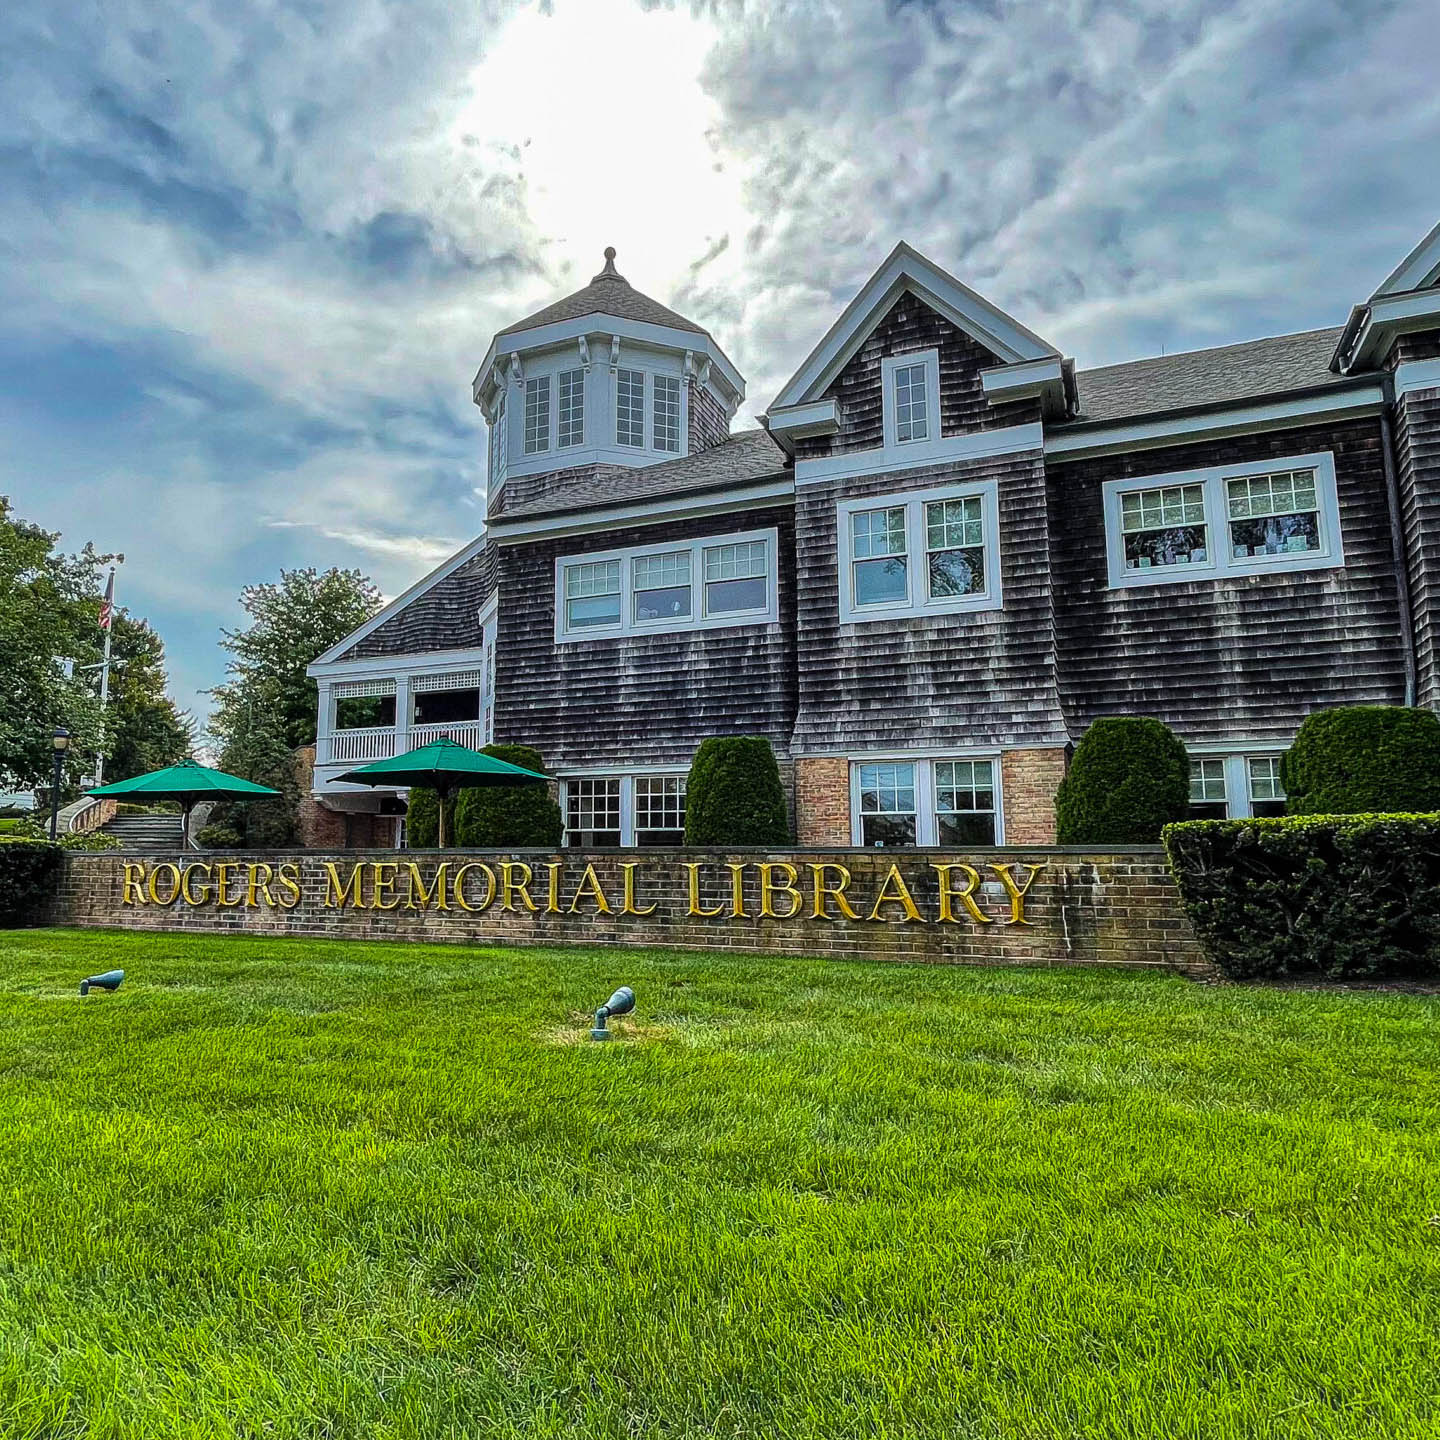 Rogers Memorial Library